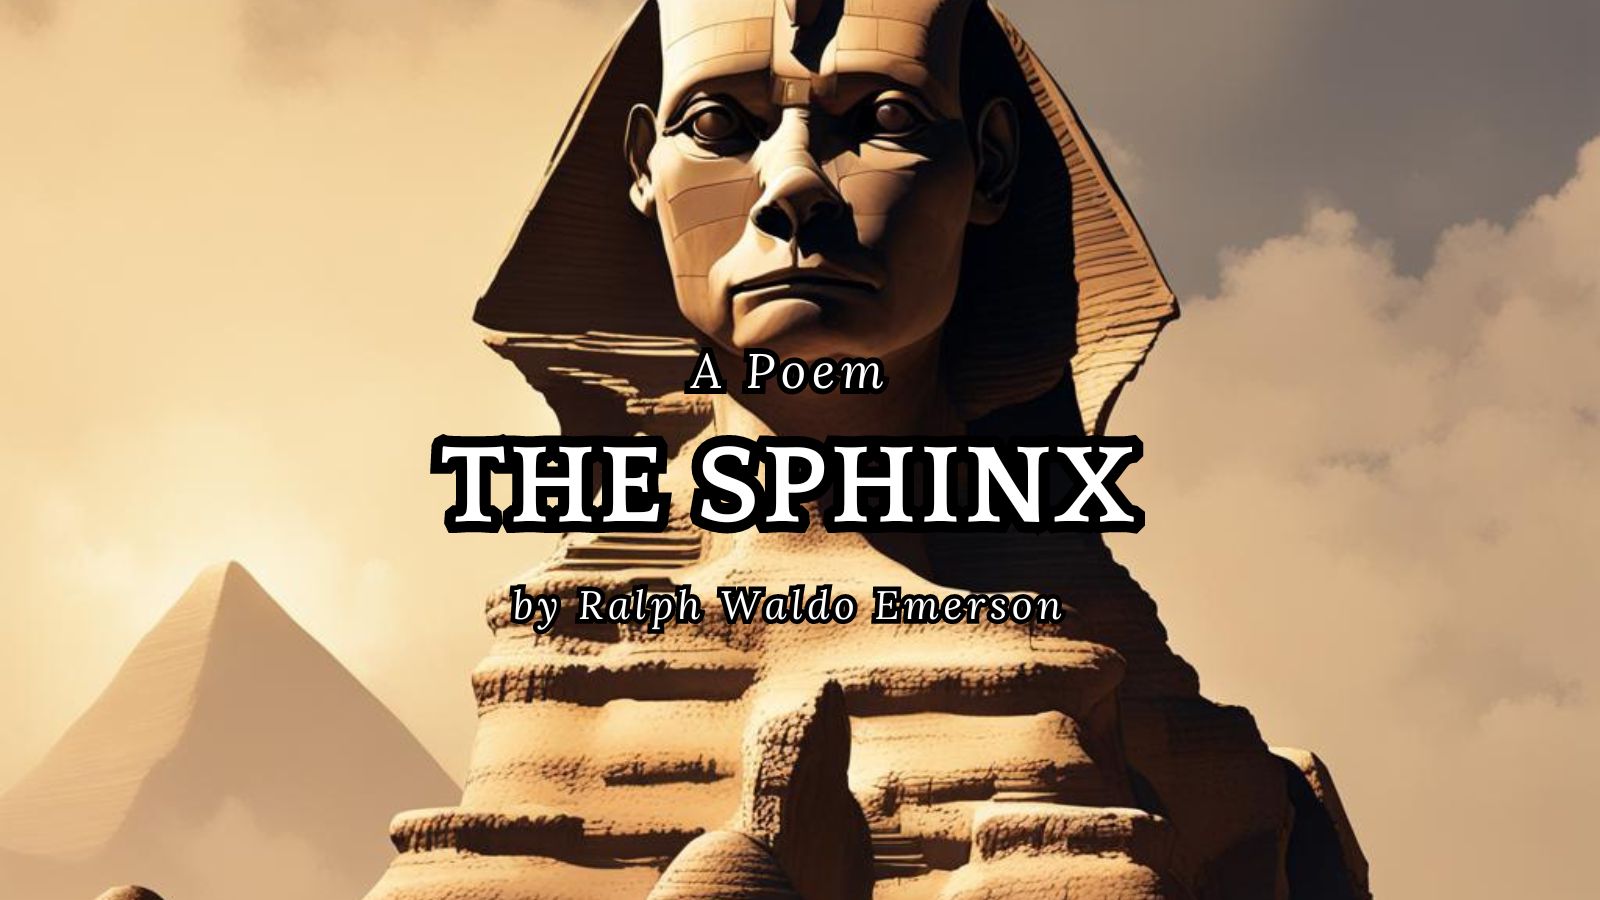 The Sphinx by Ralph Waldo Emerson